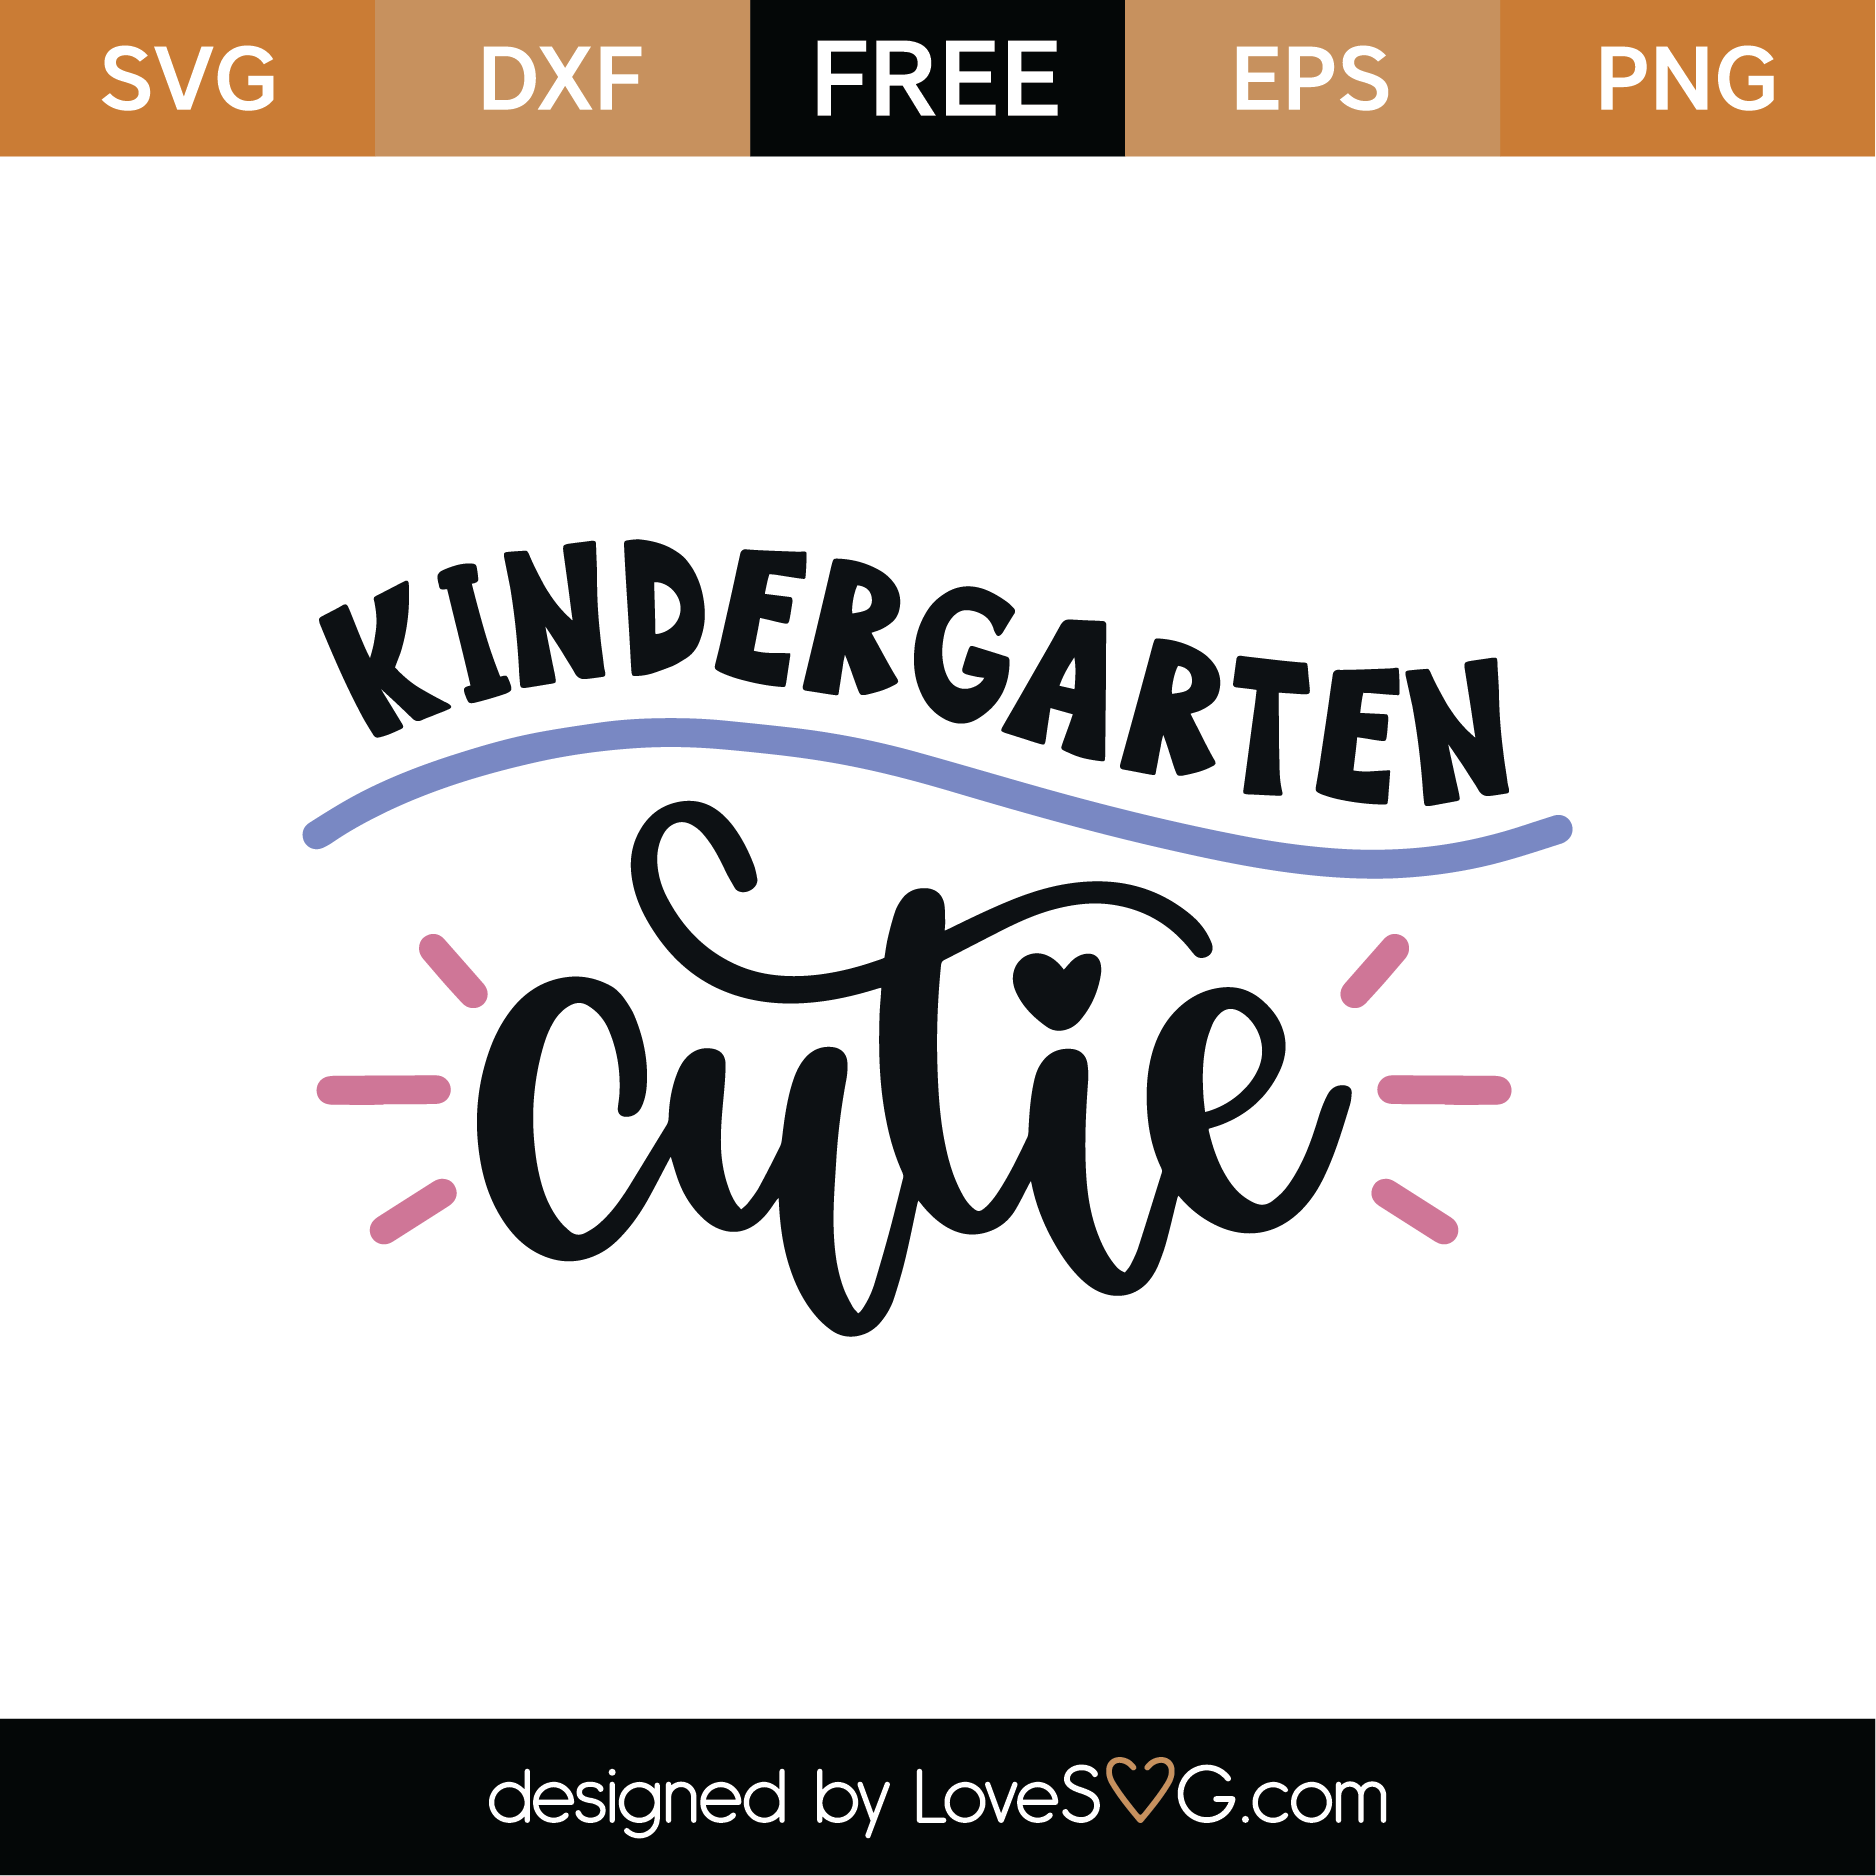 Download Free Kindergarten Cutie SVG Cut File | Lovesvg.com